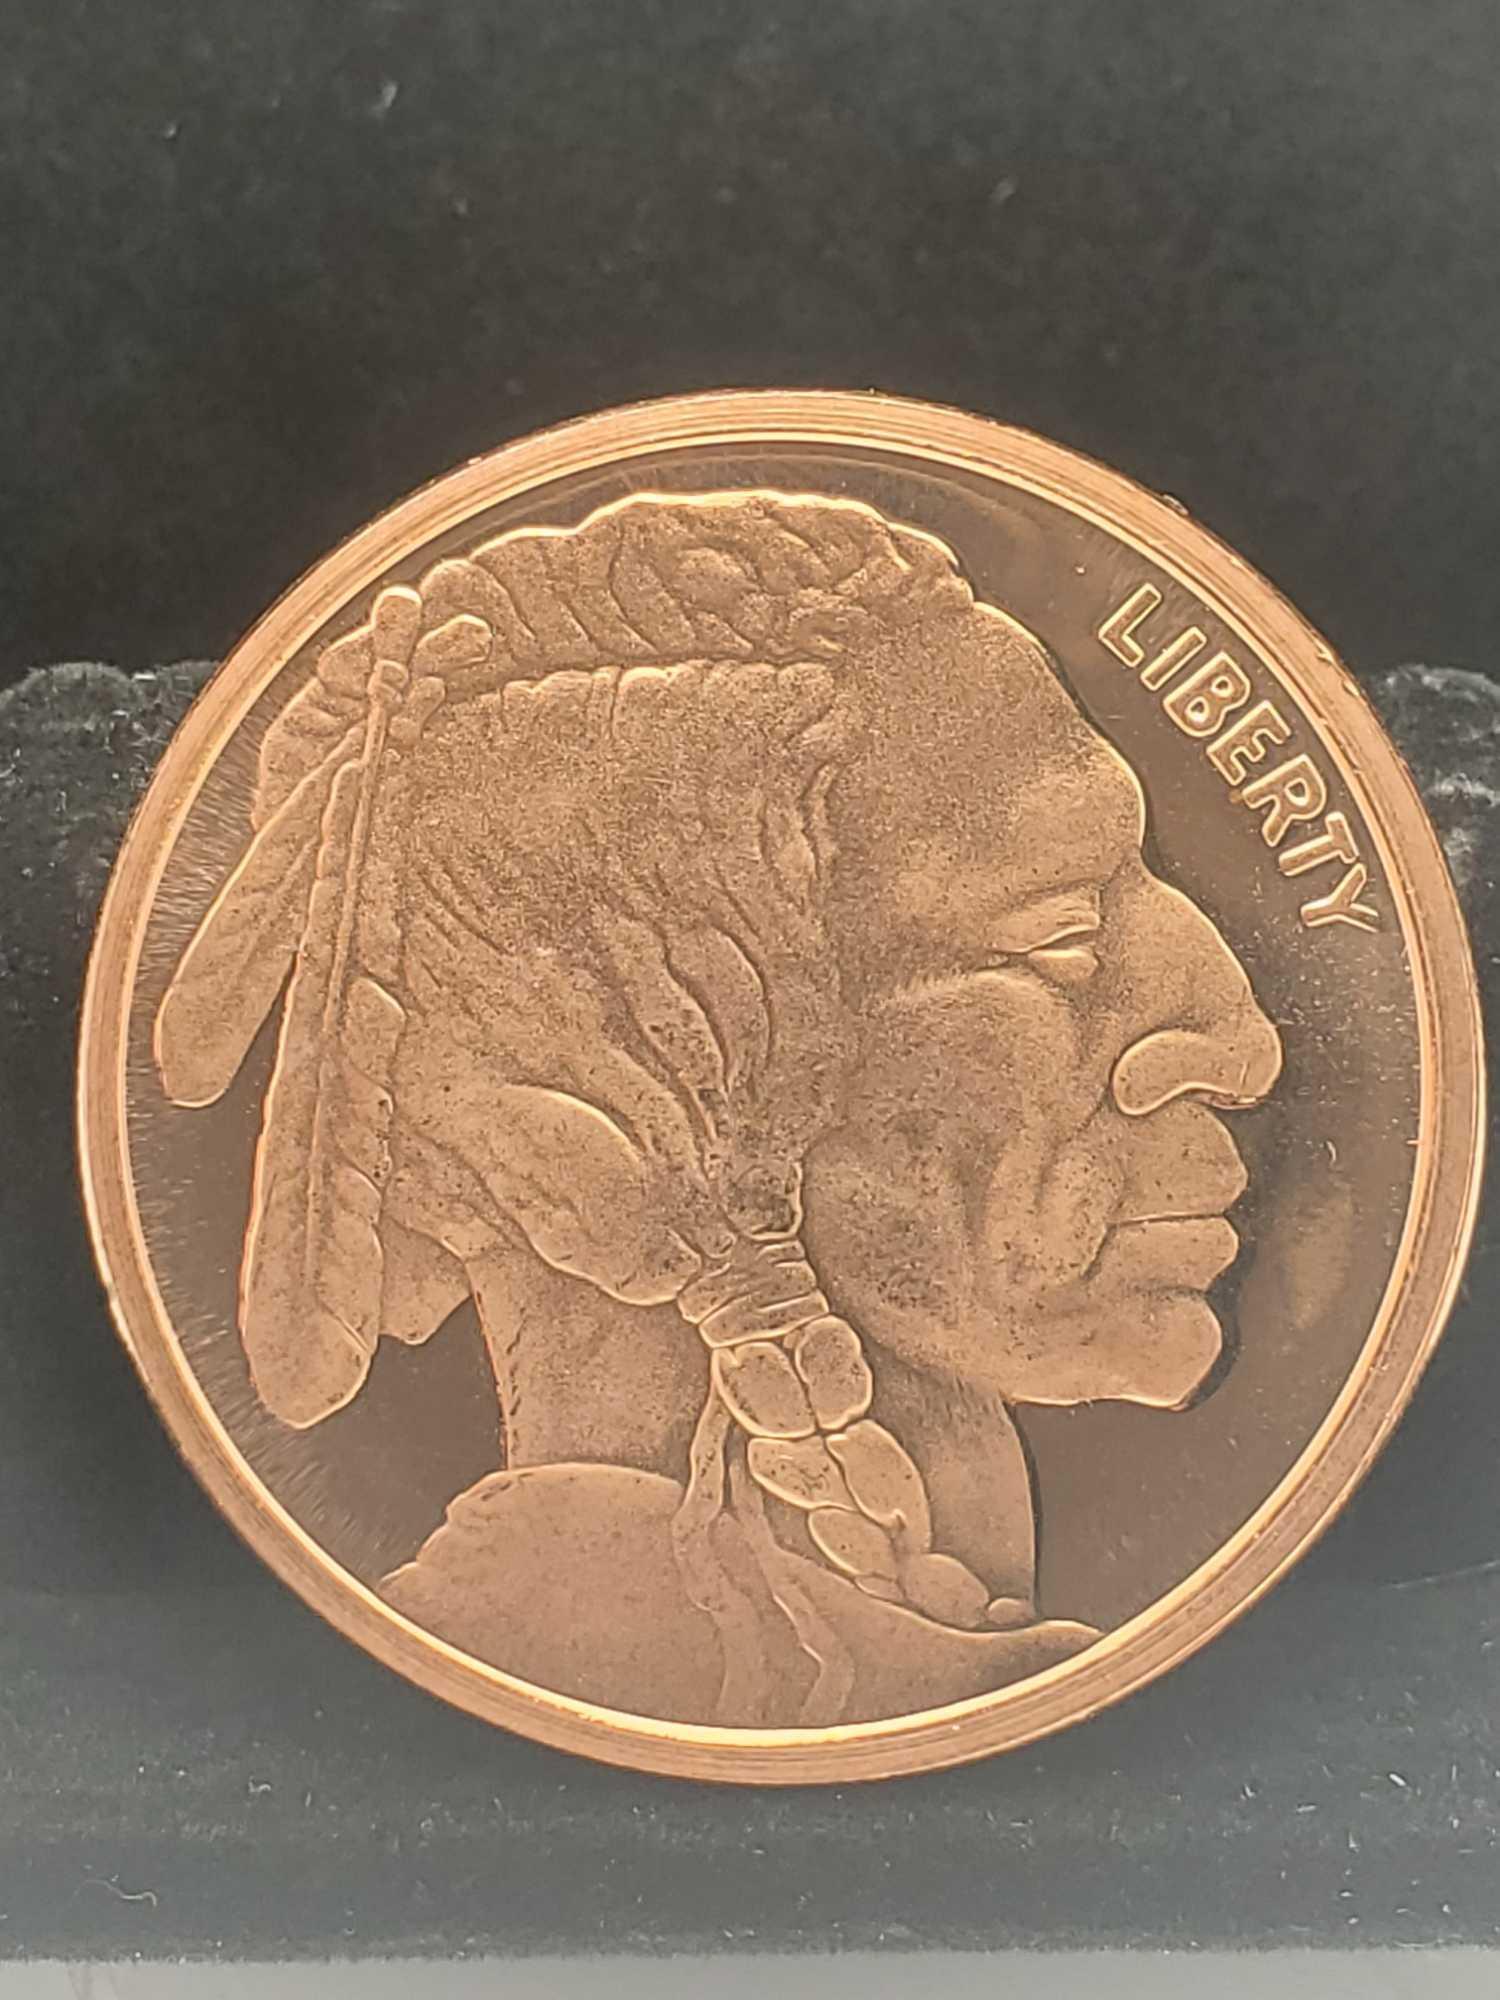 1 oz buffalo copper round and 2 silver 90% Washington quarters